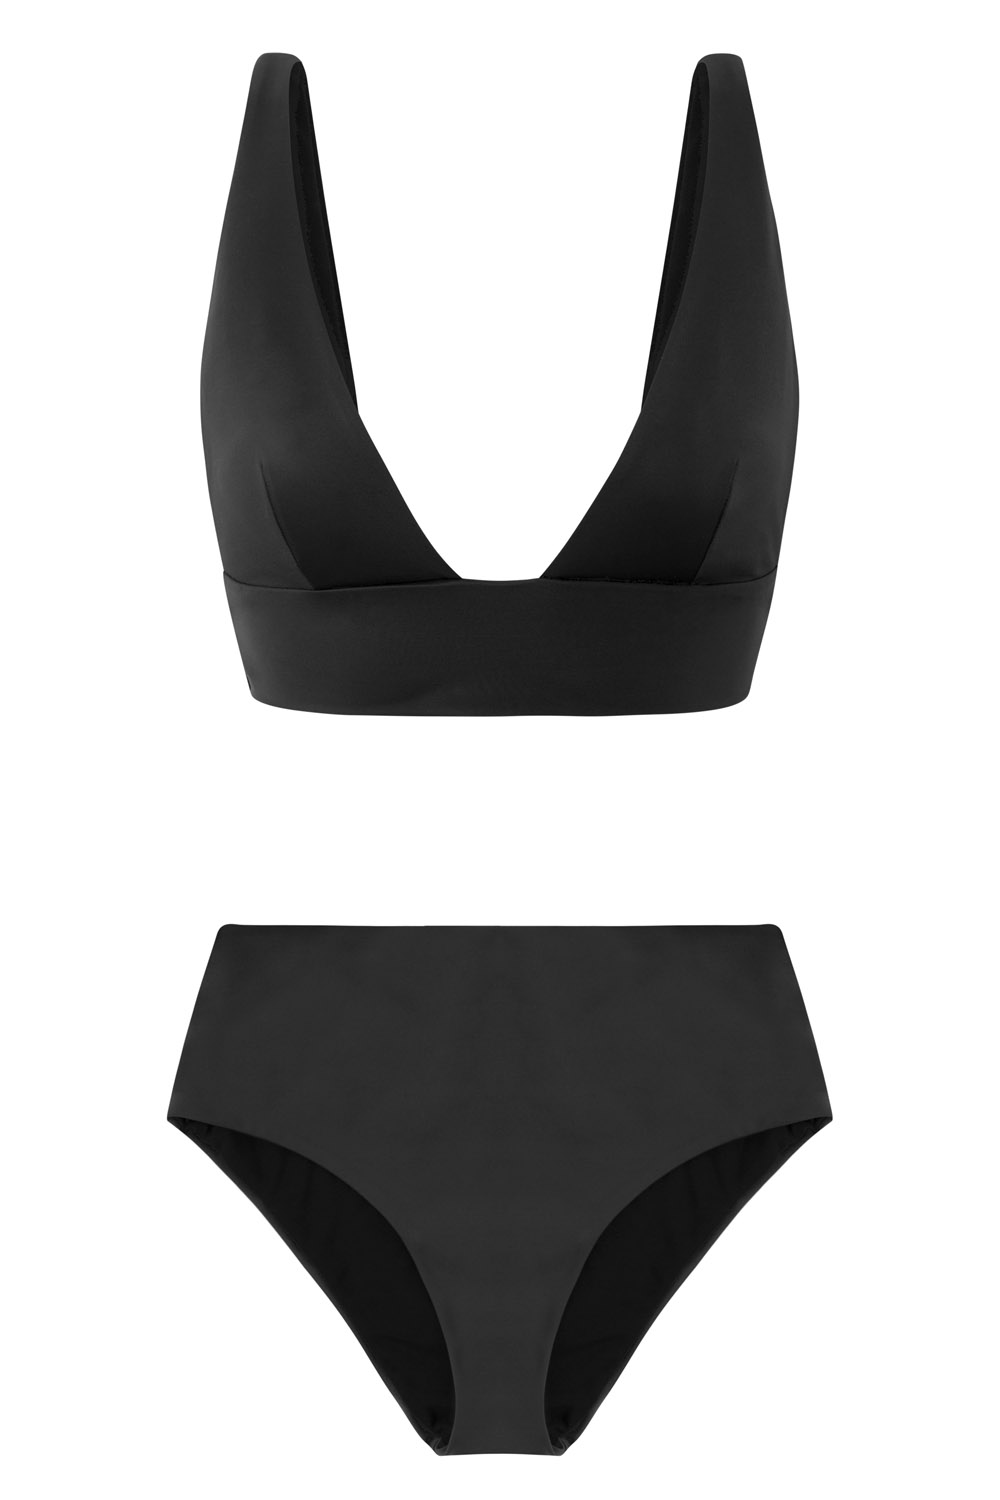 Sustainable Luxury Swimwear / Ropa de baño sostenible, eco bikini / bikini ecológico. Kapalai + Farond in black, by NOW_THEN